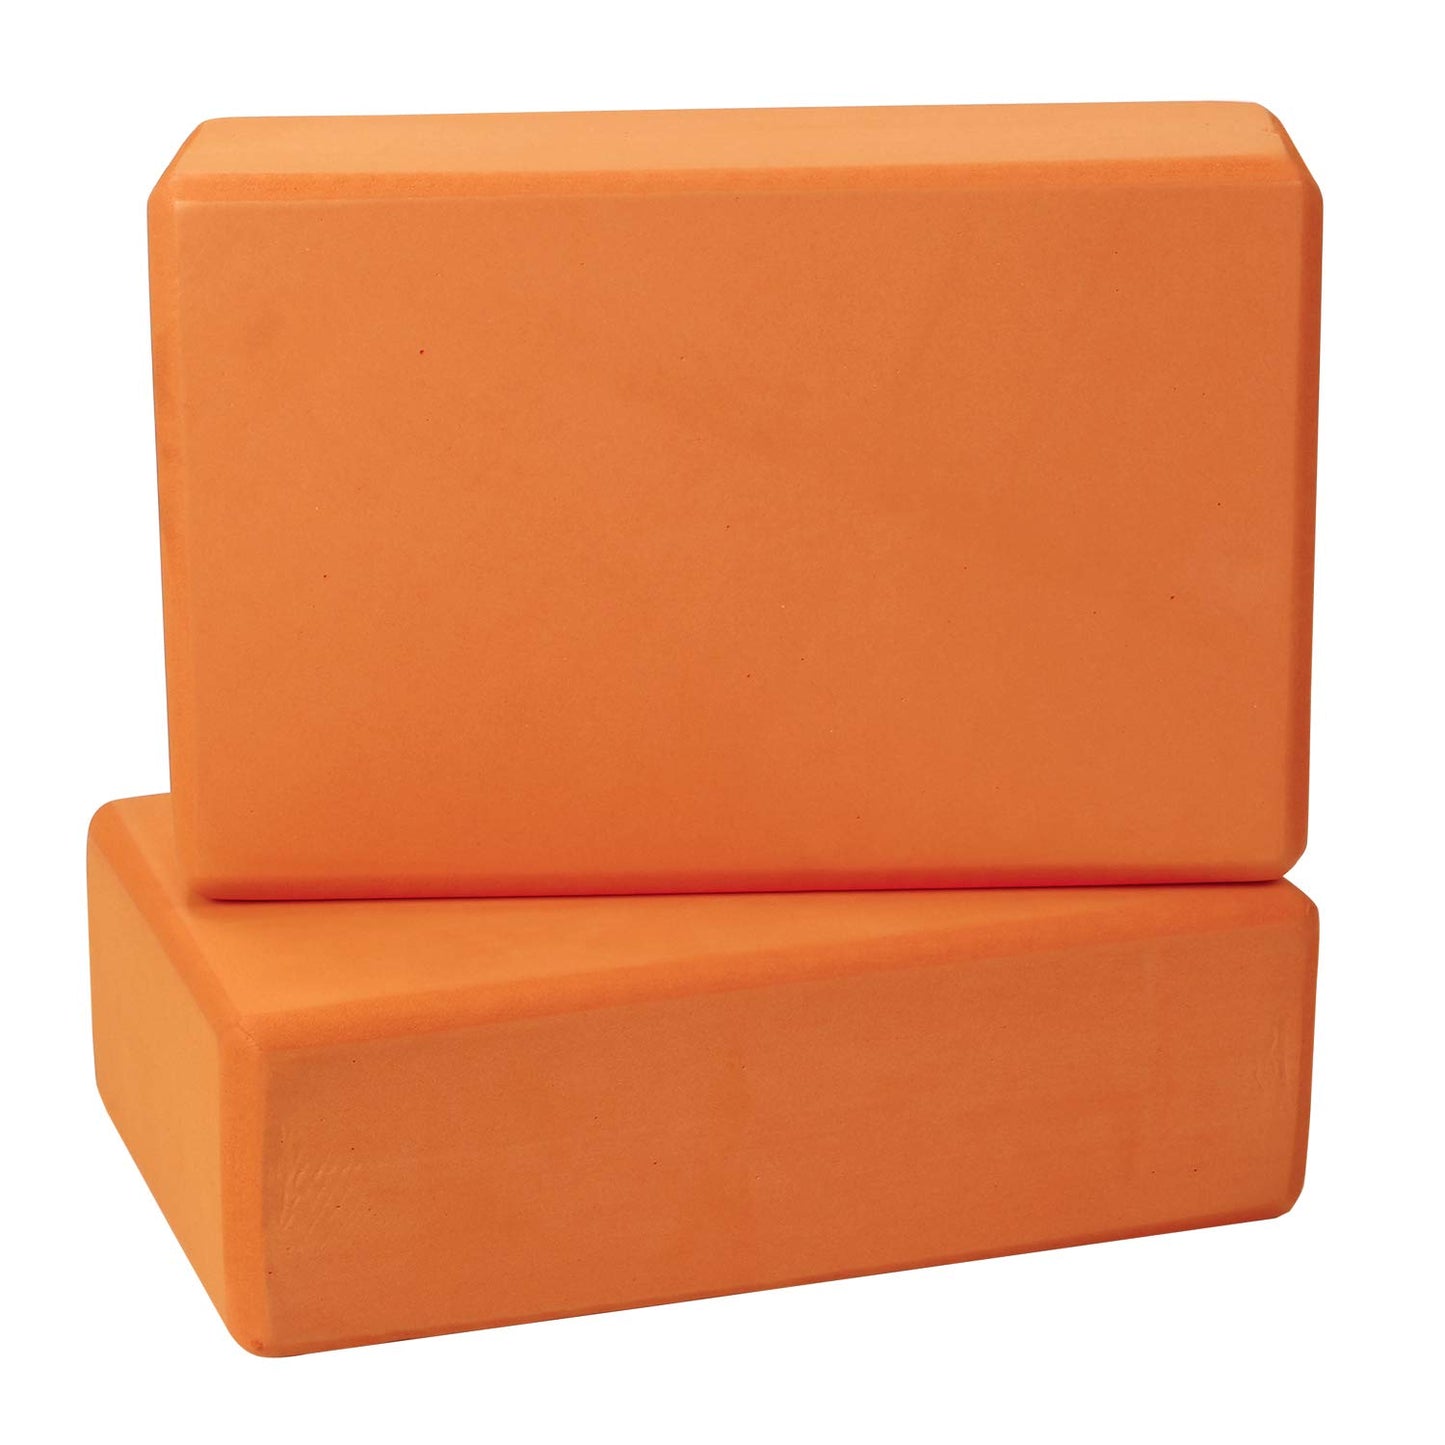 Dual Color Yoga Mat + Foam Blocks + Strap Belt - Combo 1 – UPYOGA